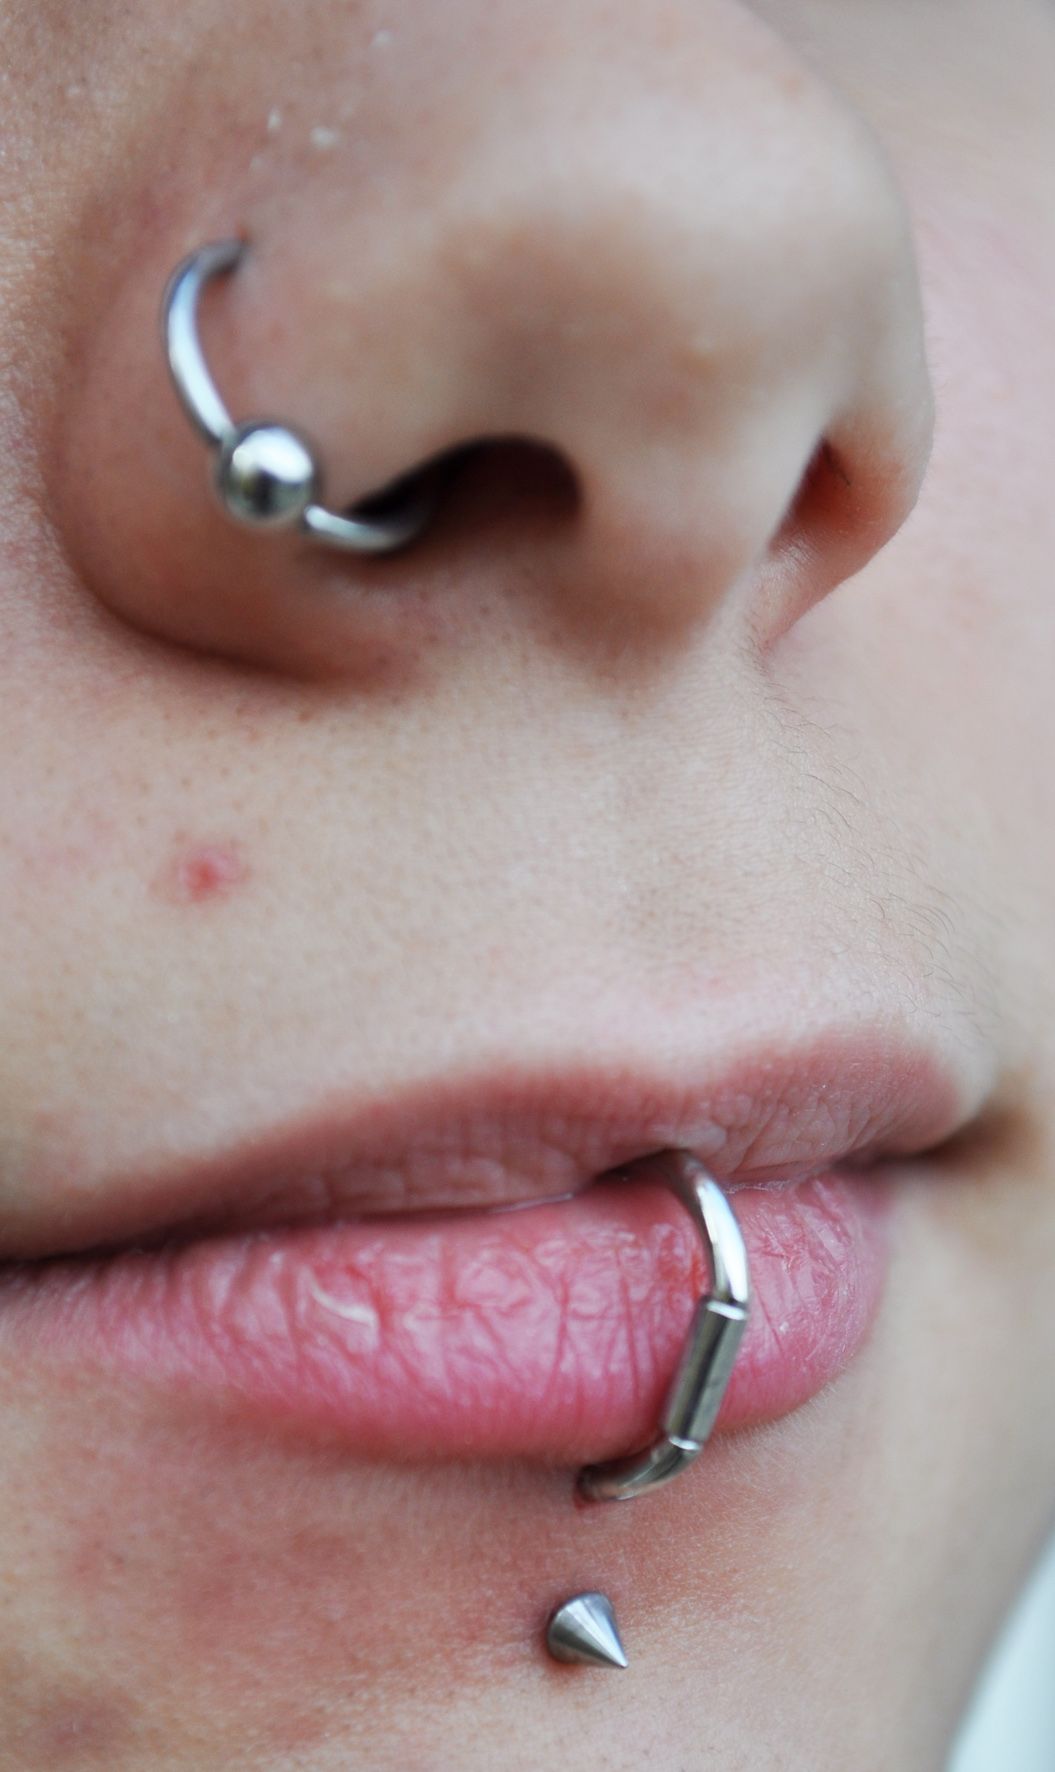 Ajak piercing, Orr piercing